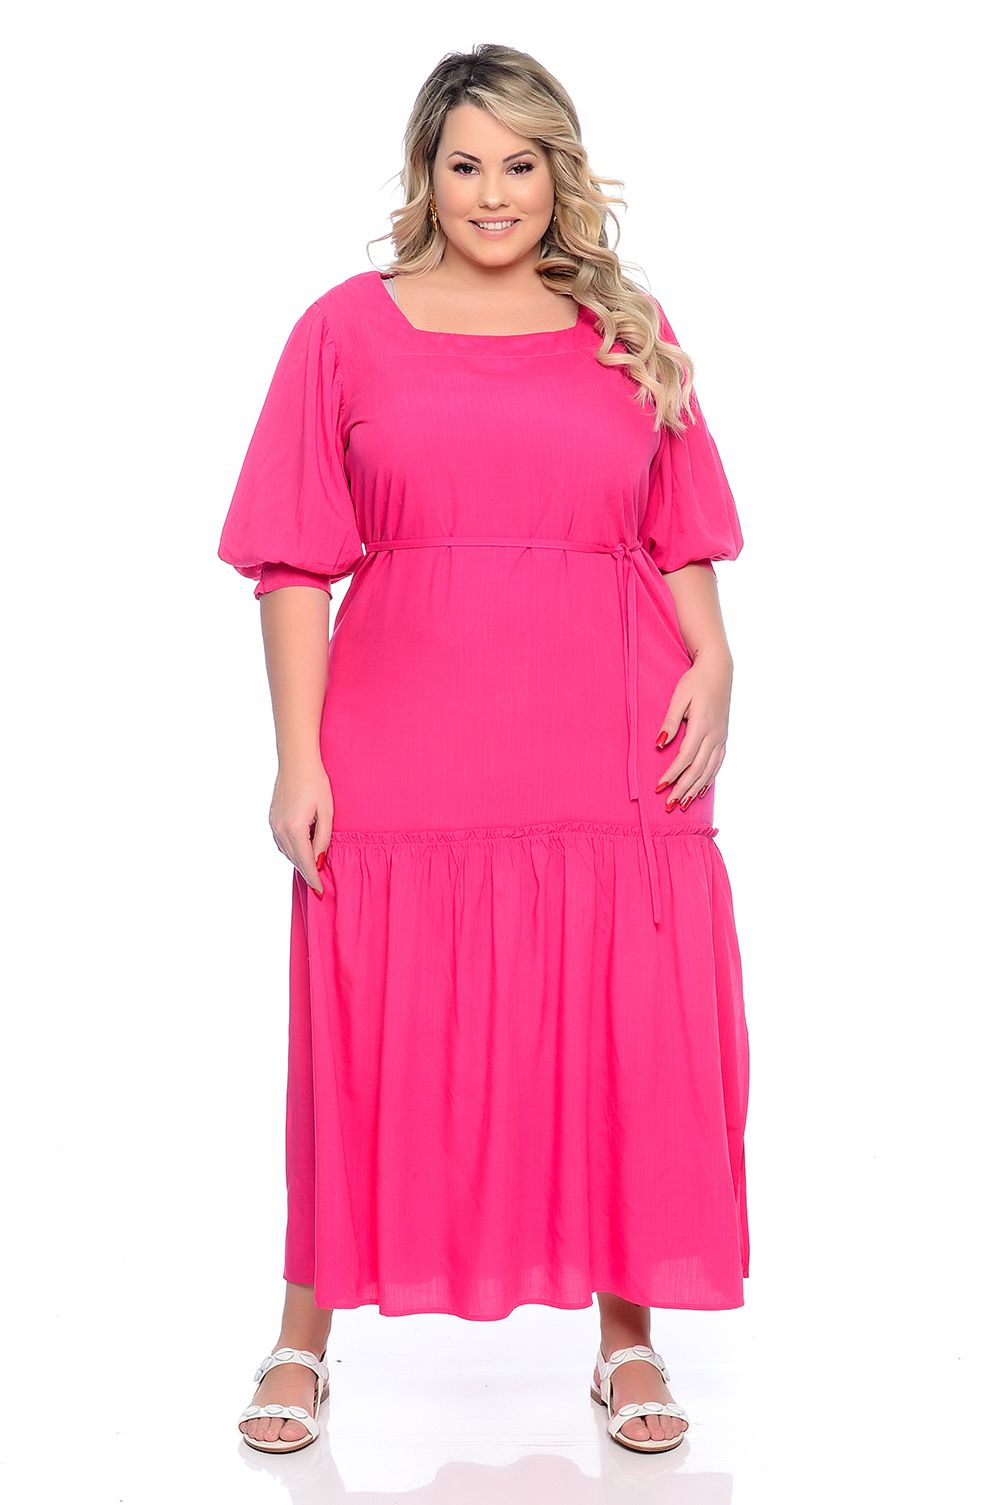 Vestido Plus Size Pink em Renda